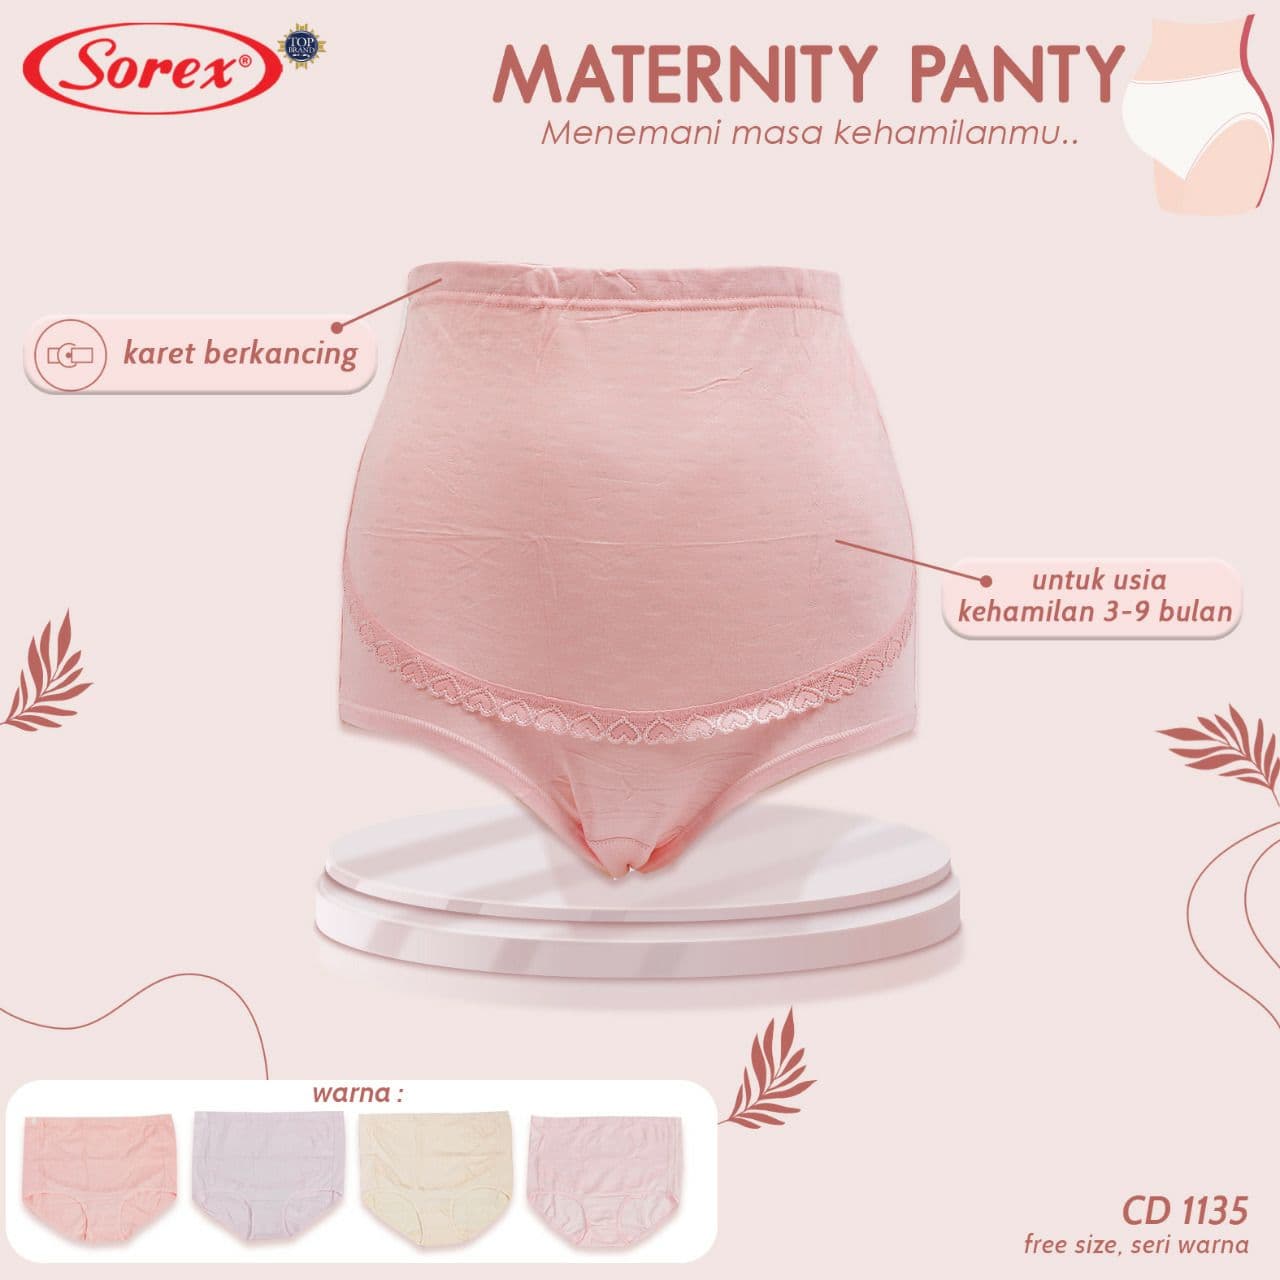 celana-dalam-hamil-celana-dalam-ibu-hamil-maternity-pants-sorex-cd1135